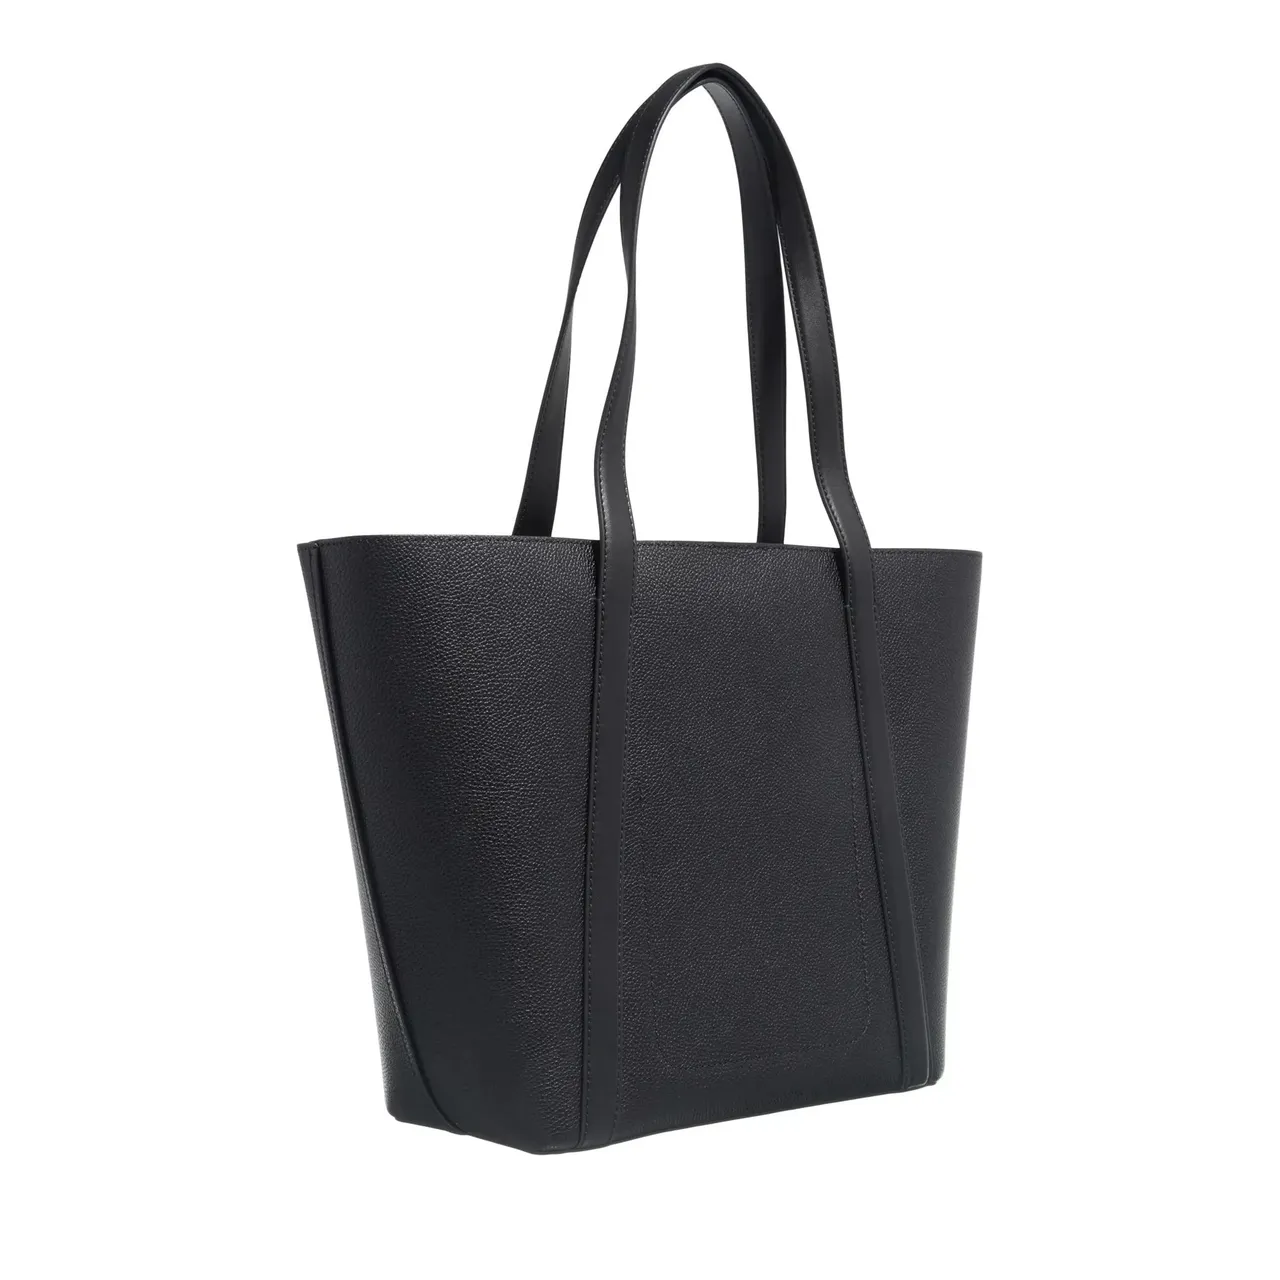 Michael Kors Tote Bags - Hadleigh Large Double Handle Tote - black - Tote Bags for ladies